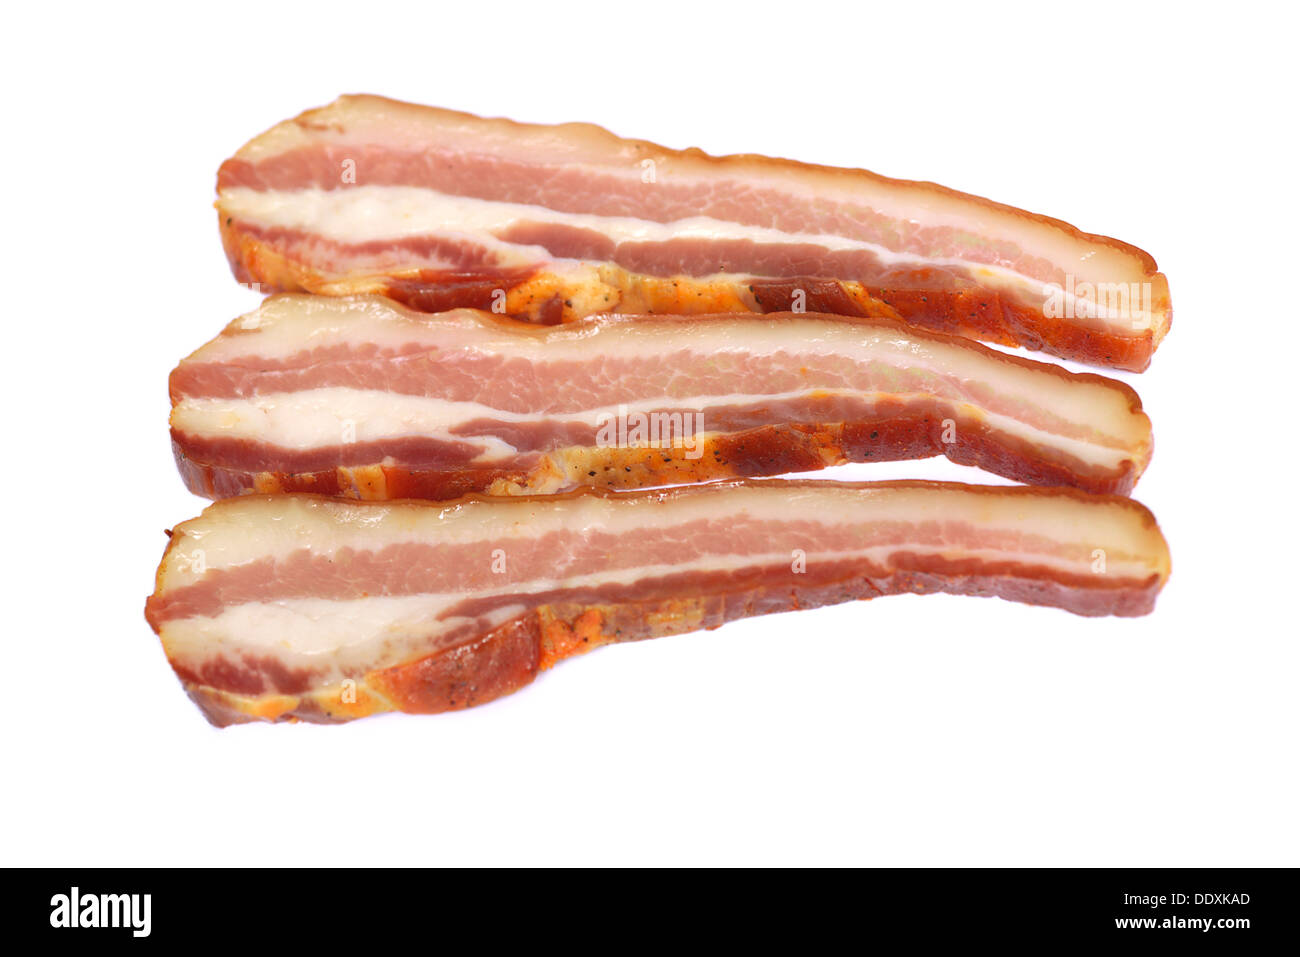 Bacon lonchas, rodajas de tocino europeo Foto de stock